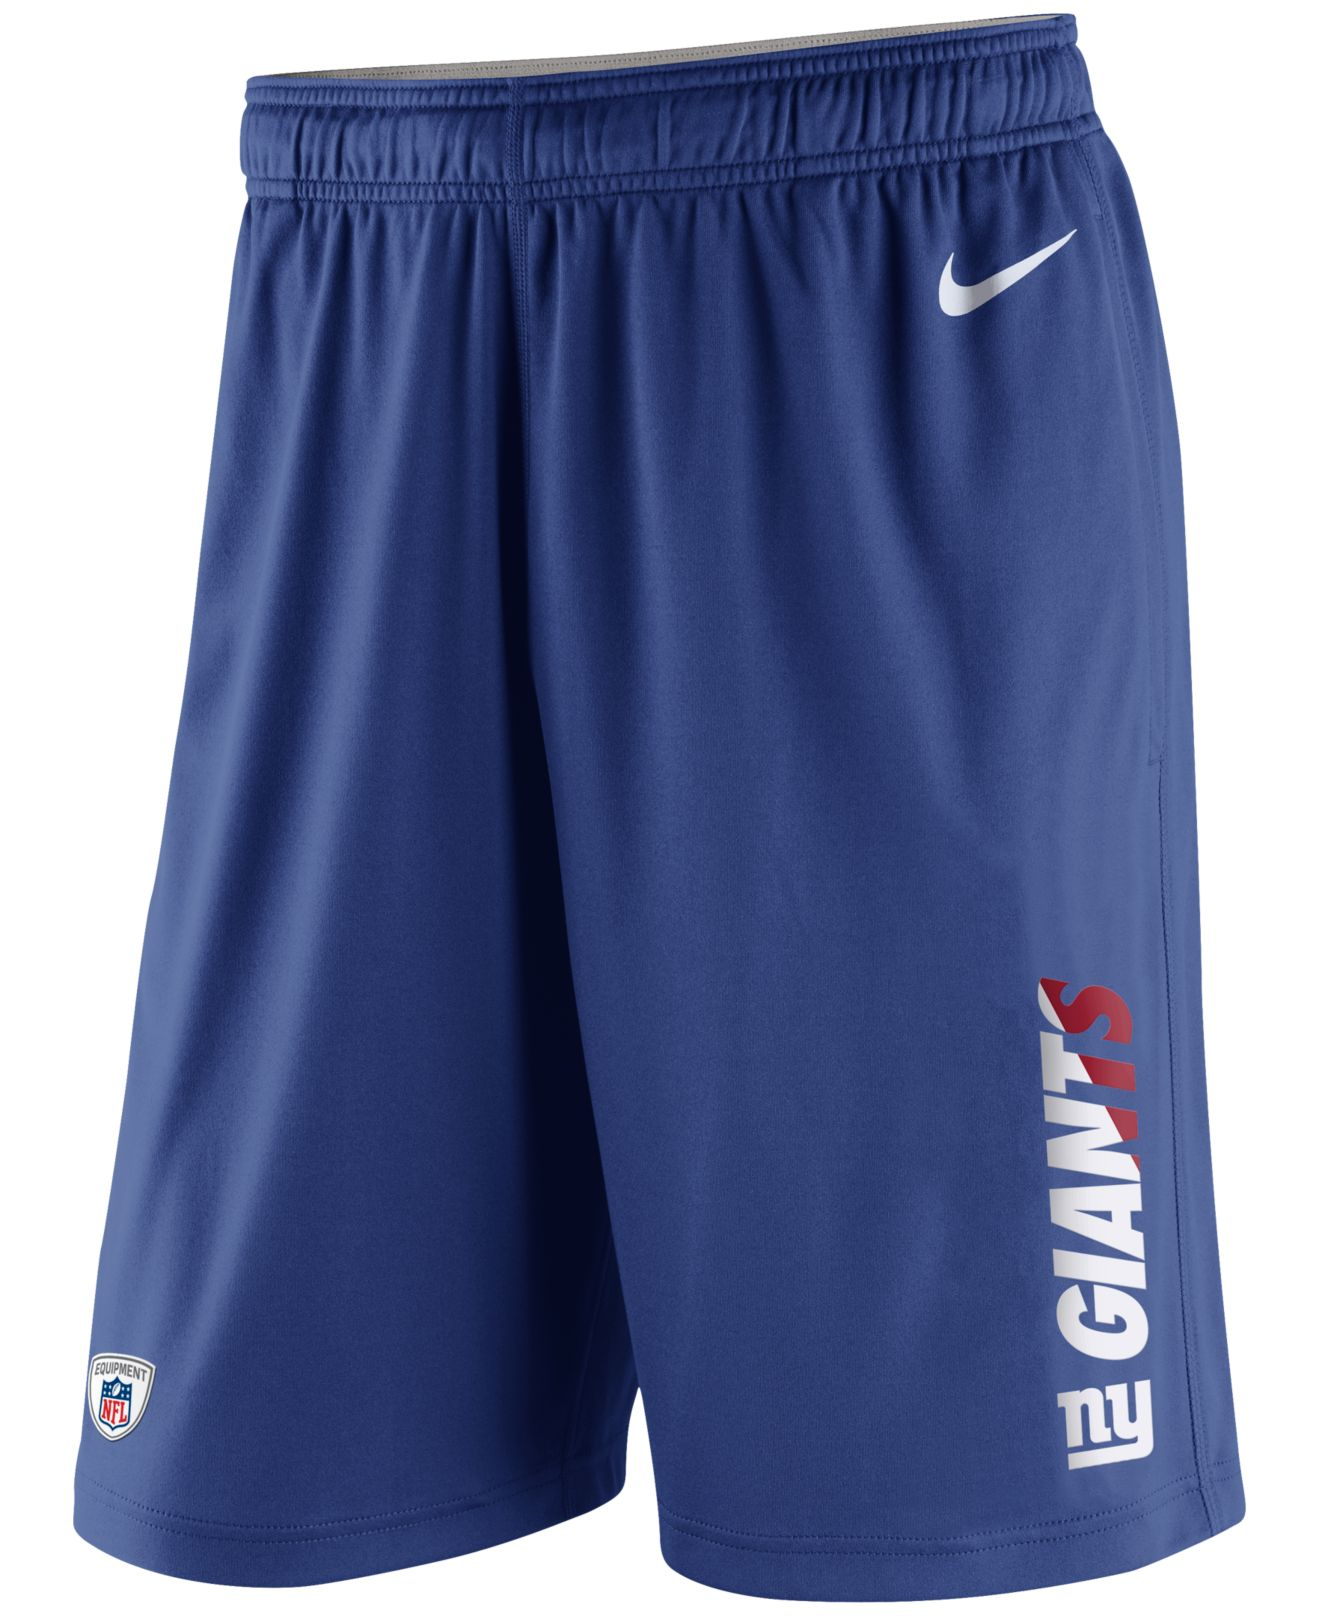 Lyst - Nike Men's New York Giants Practice Fly 3.0 Dri-fit Shorts in ...